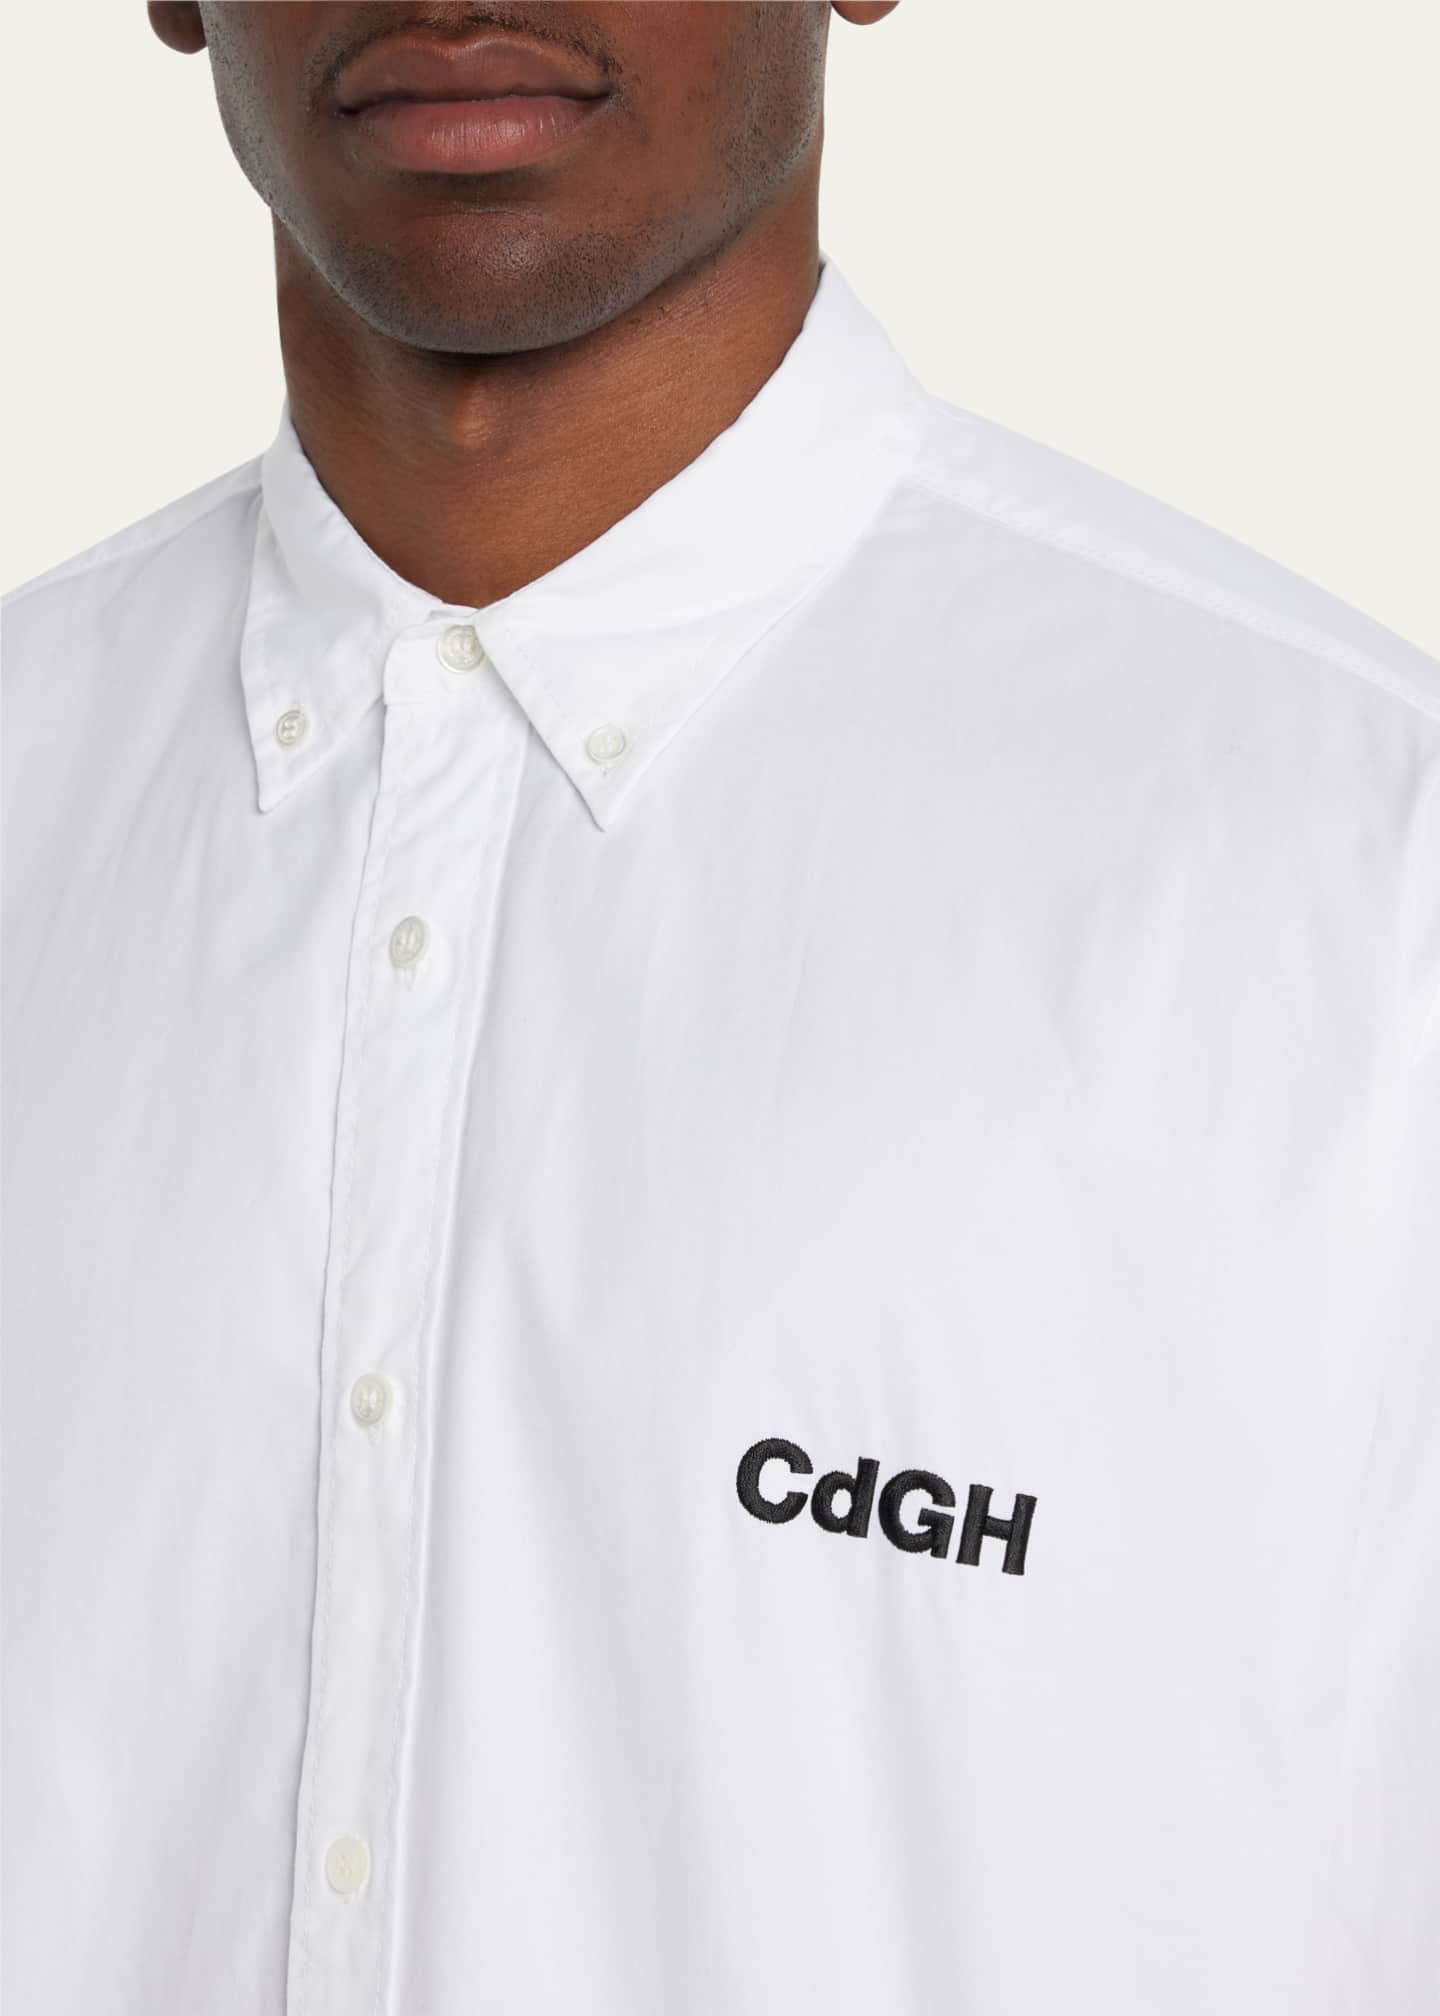 CDG HOMME Men's Embroidered Logo Oxford Dress Shirt - Bergdorf Goodman